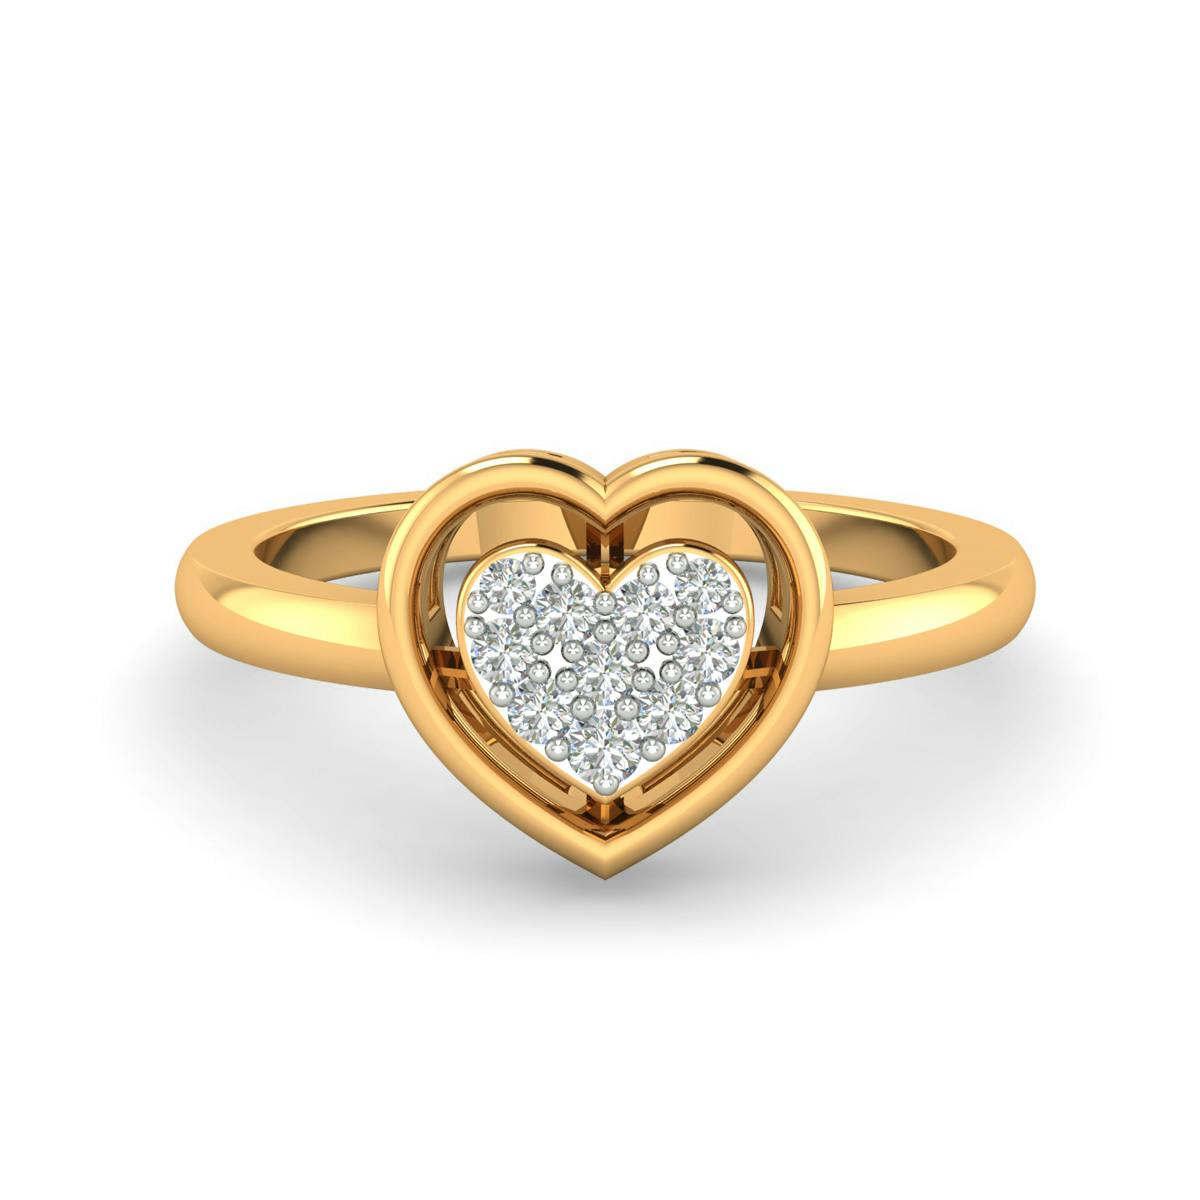 Sovereign Sceptre diamond ring